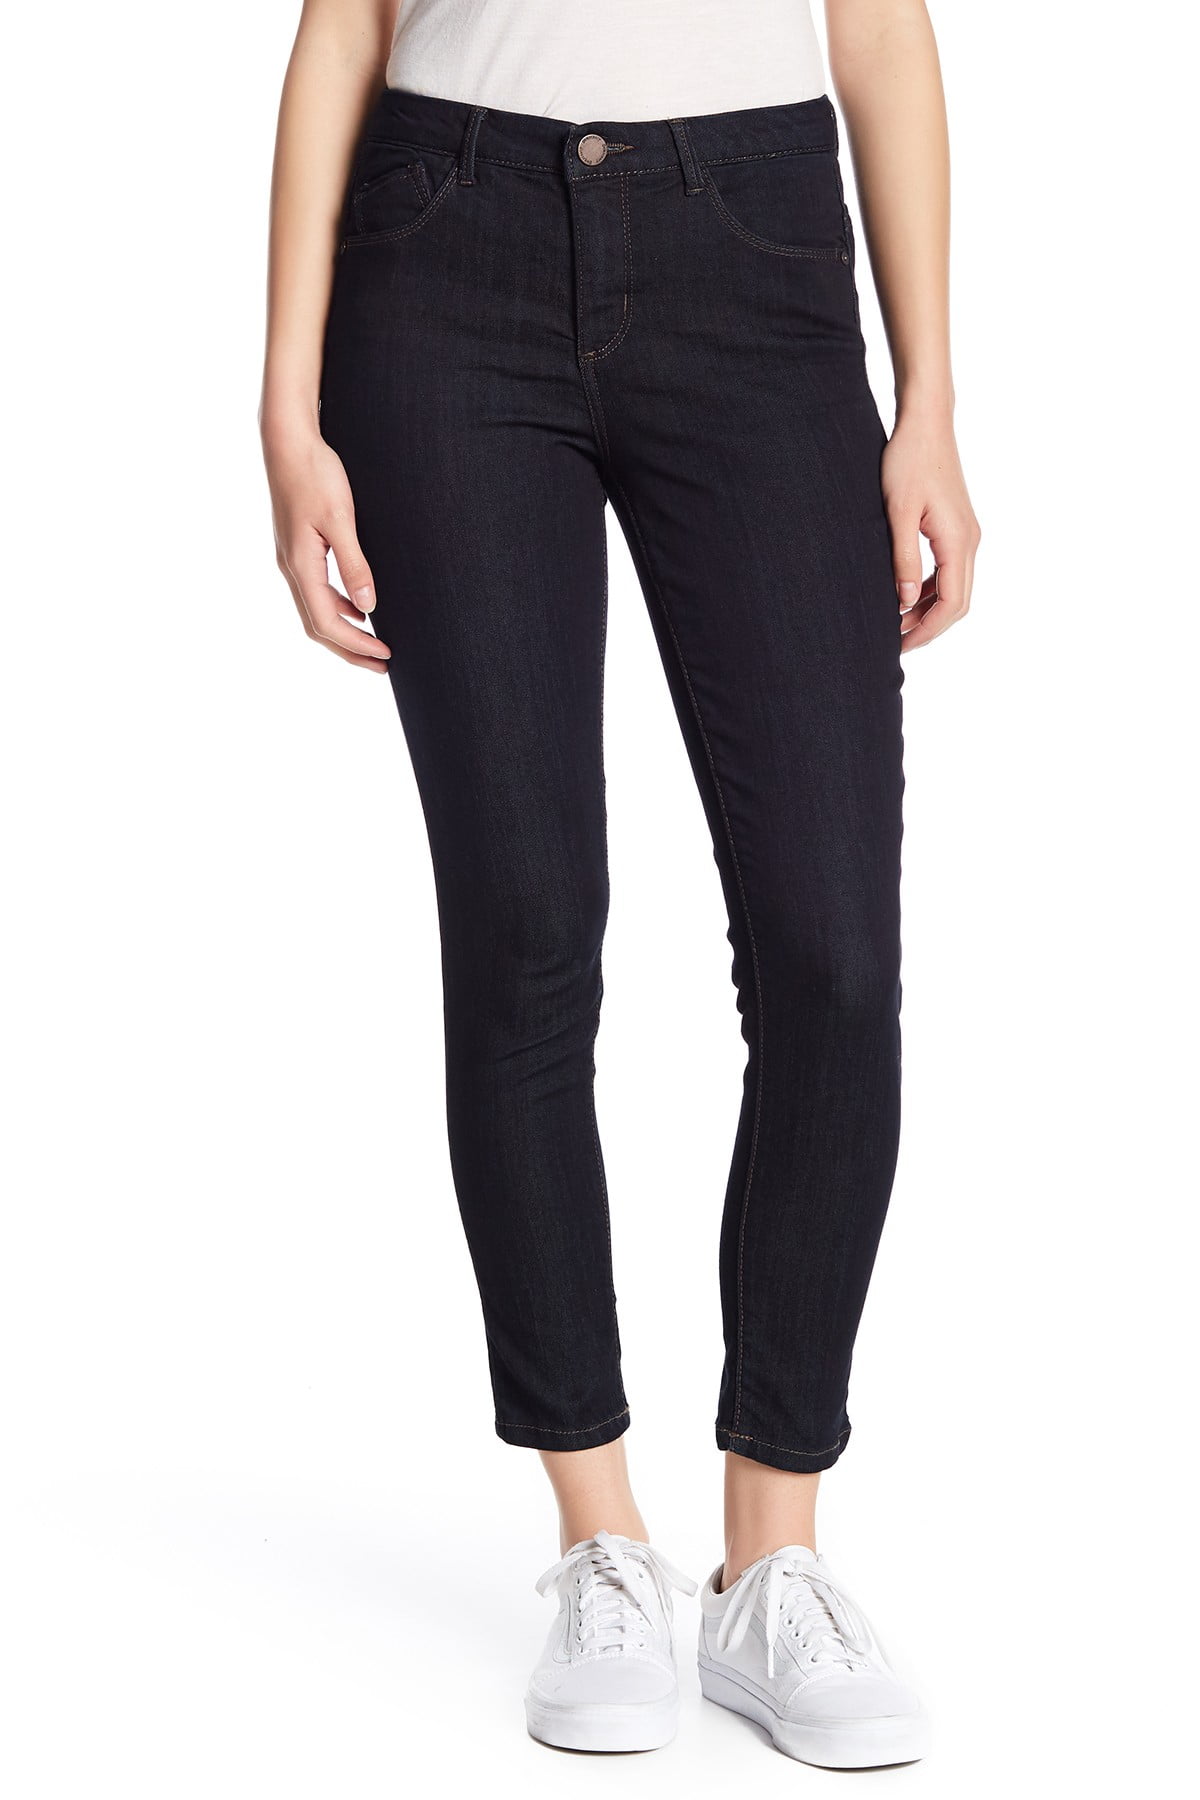 Democracy - Womens Jeans Petite Stretch Skinny Slimming 2P - Walmart ...